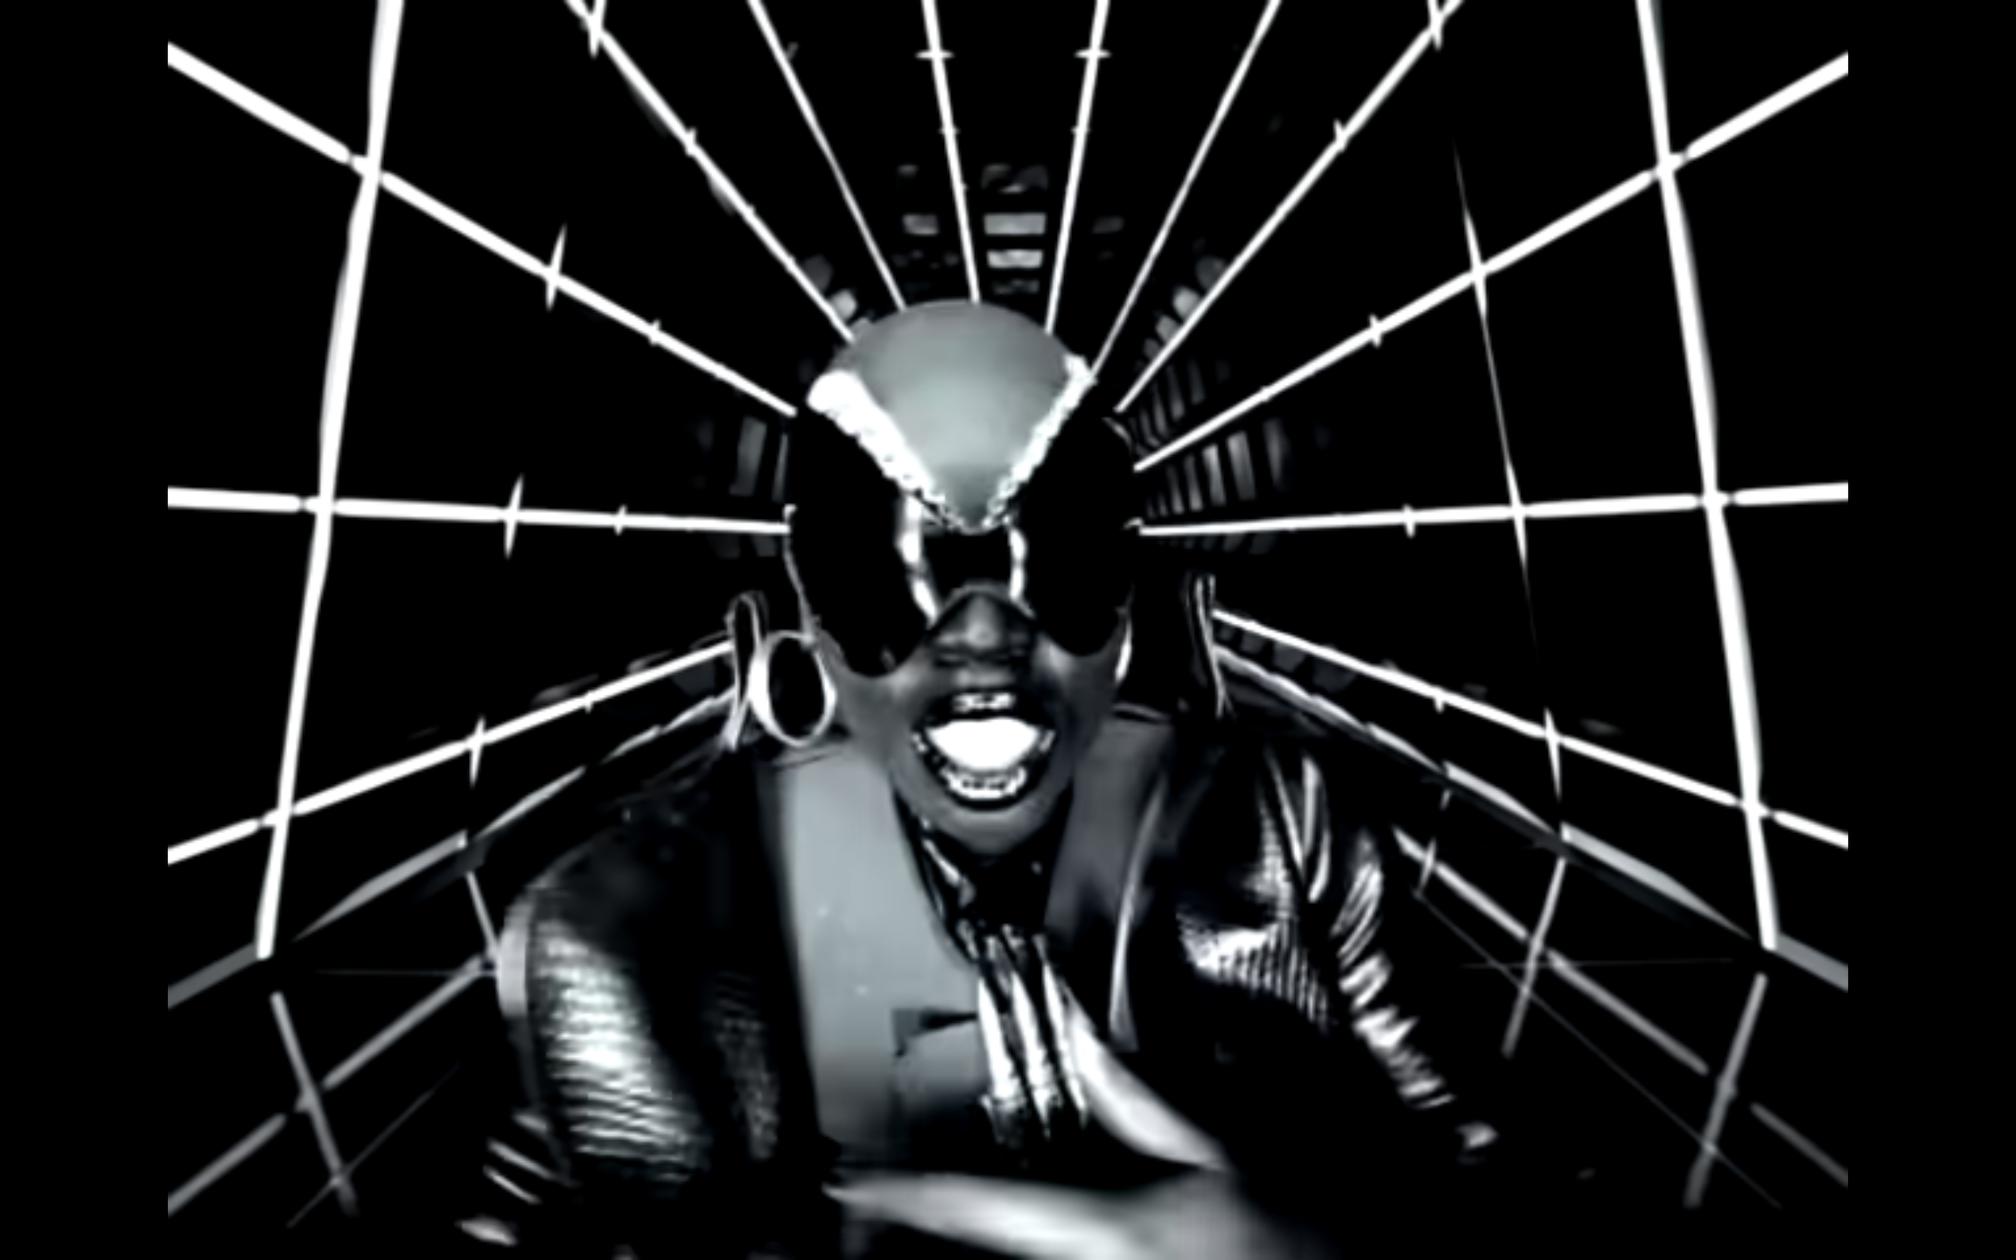 Still from artist Missy Elliott's She's a bxxxx music video. She is dressed in all black, futuristic gear